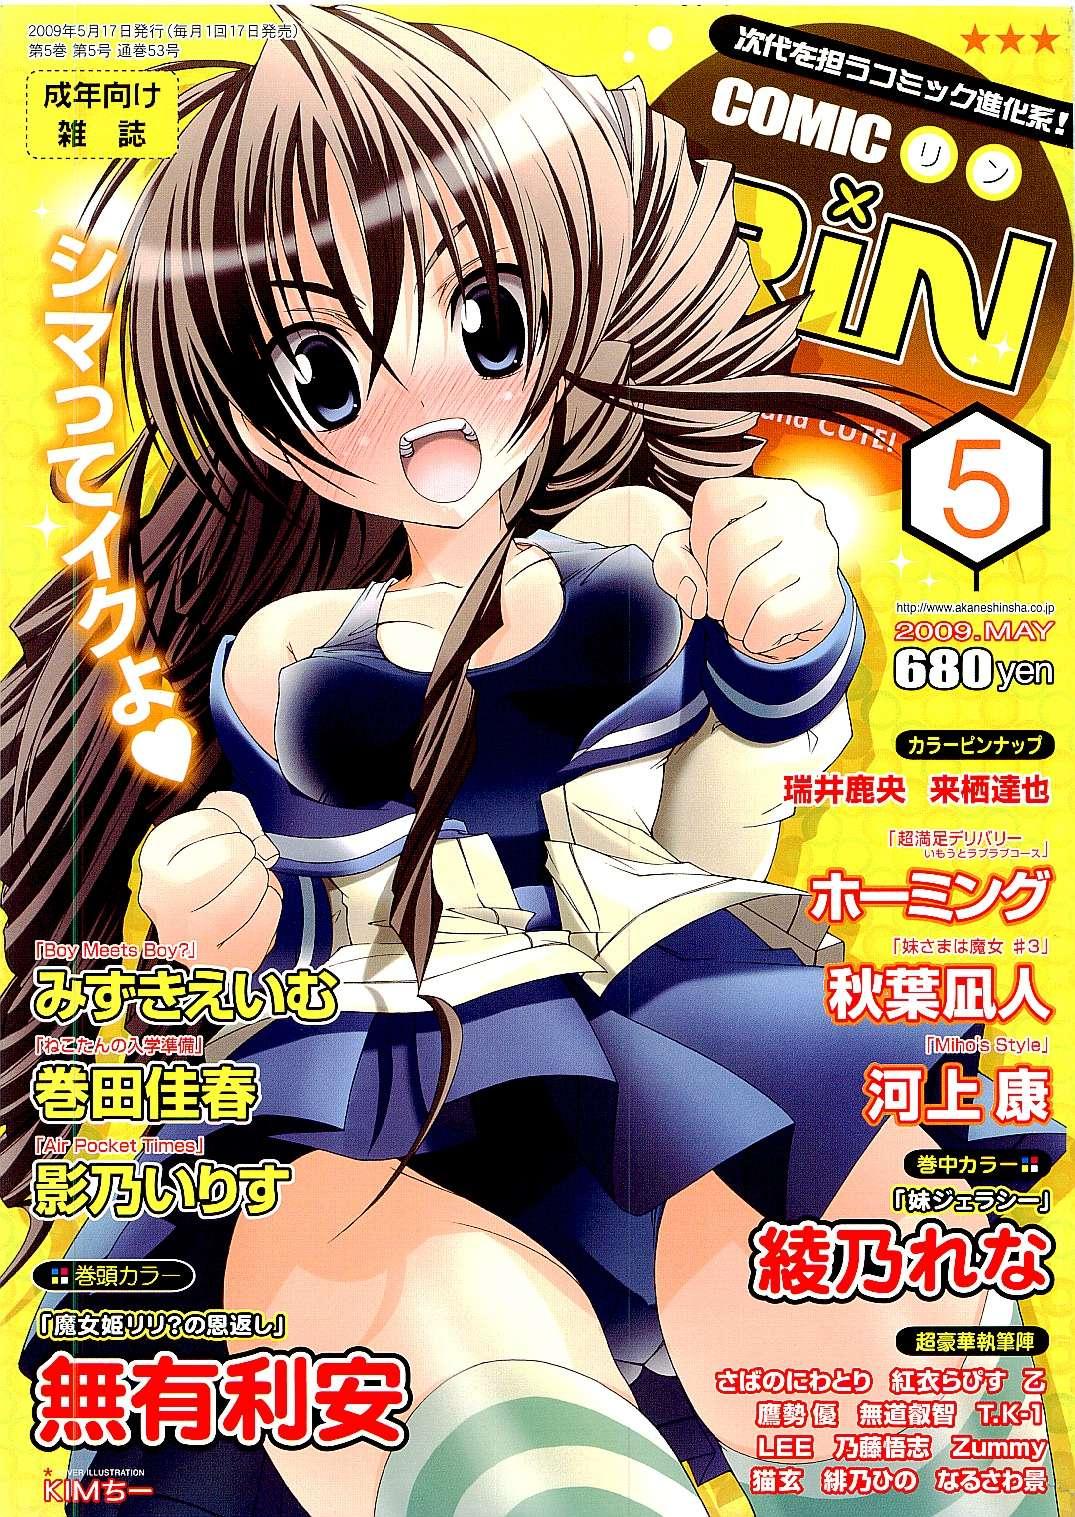 Comic RiN [2009-05] Vol.53 0